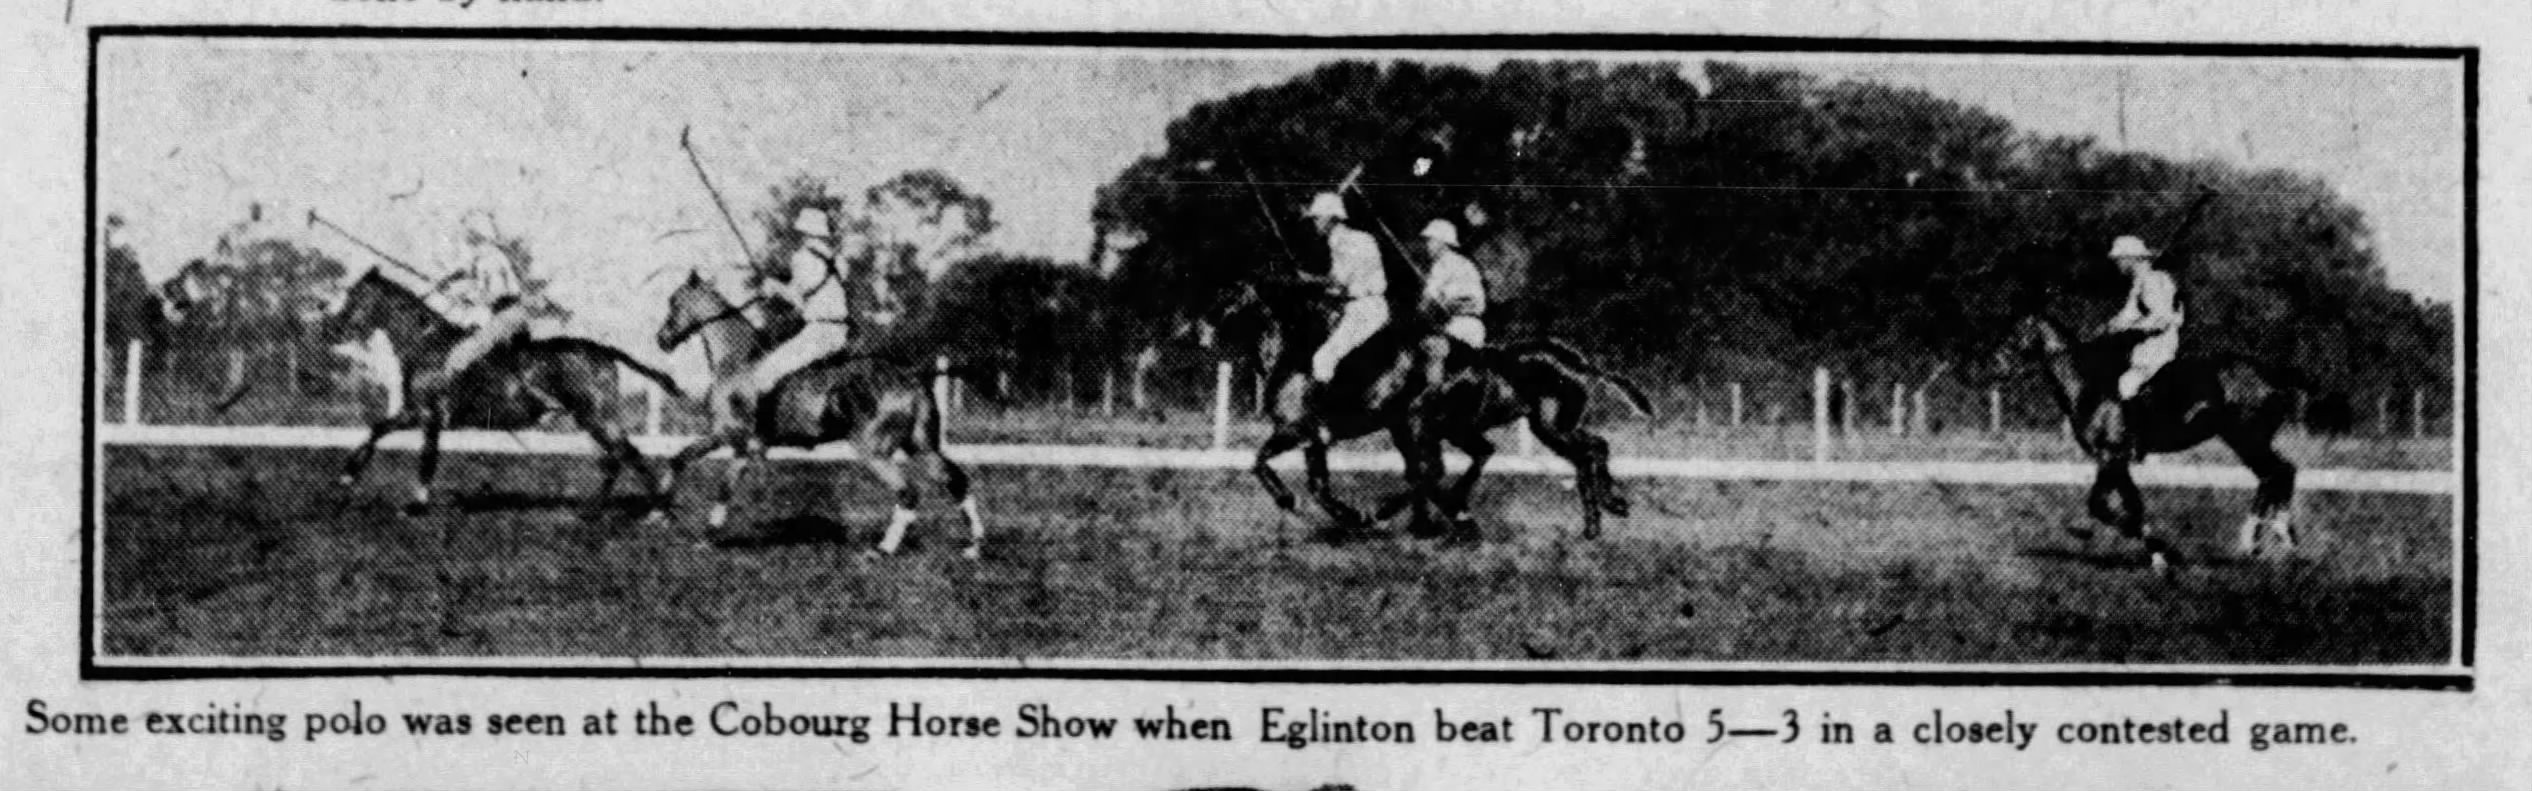 1923-08-25 Horses -Polo at Cobourg Horse Show -Saskatoon Star Phoenix